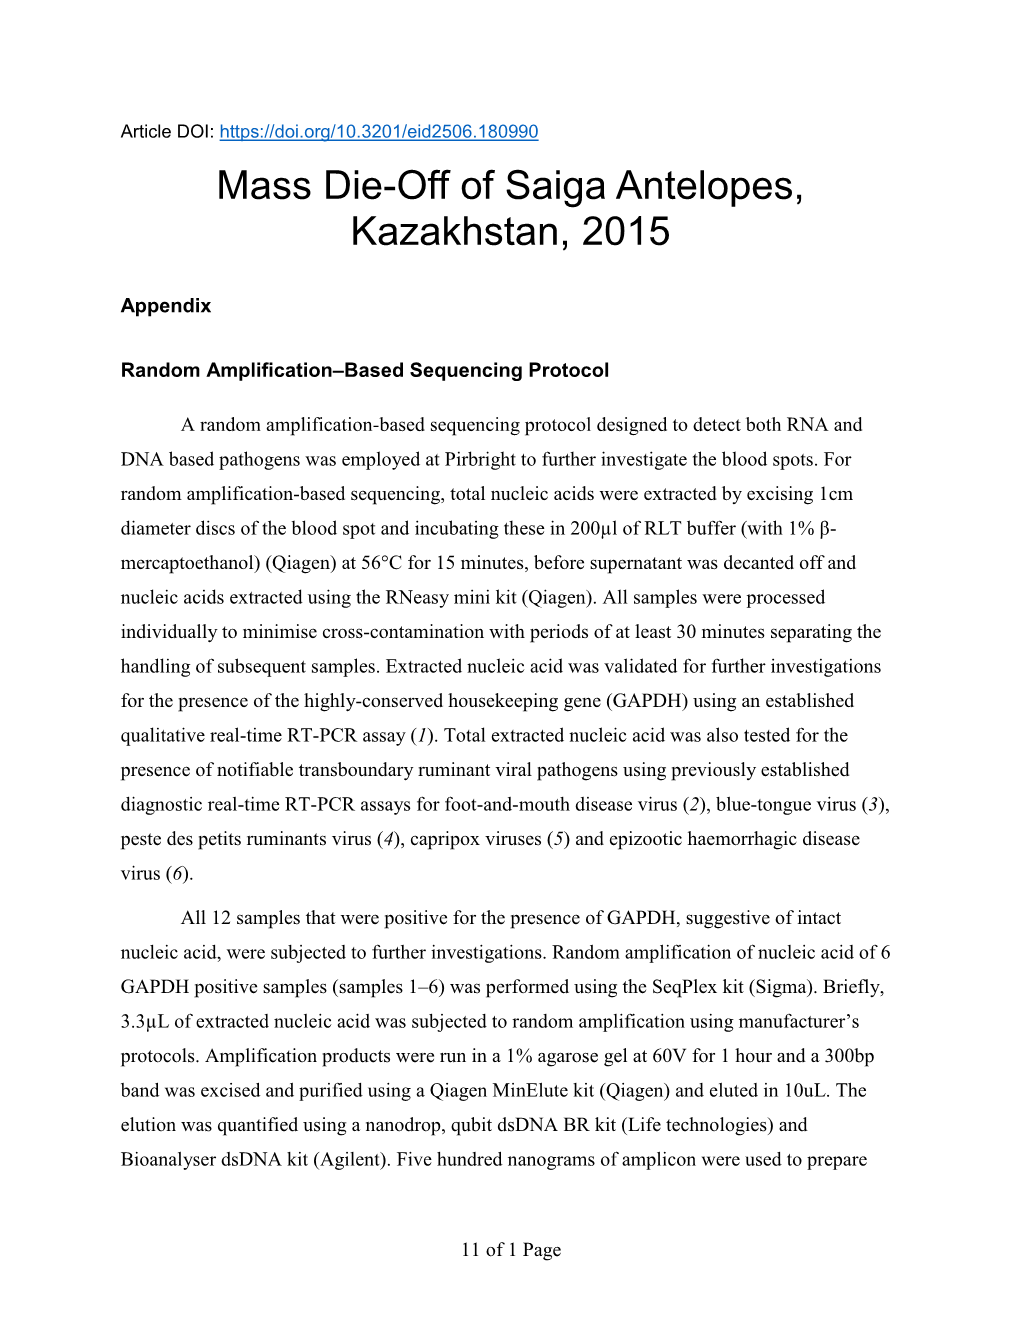 Mass Die-Off of Saiga Antelopes, Kazakhstan, 2015